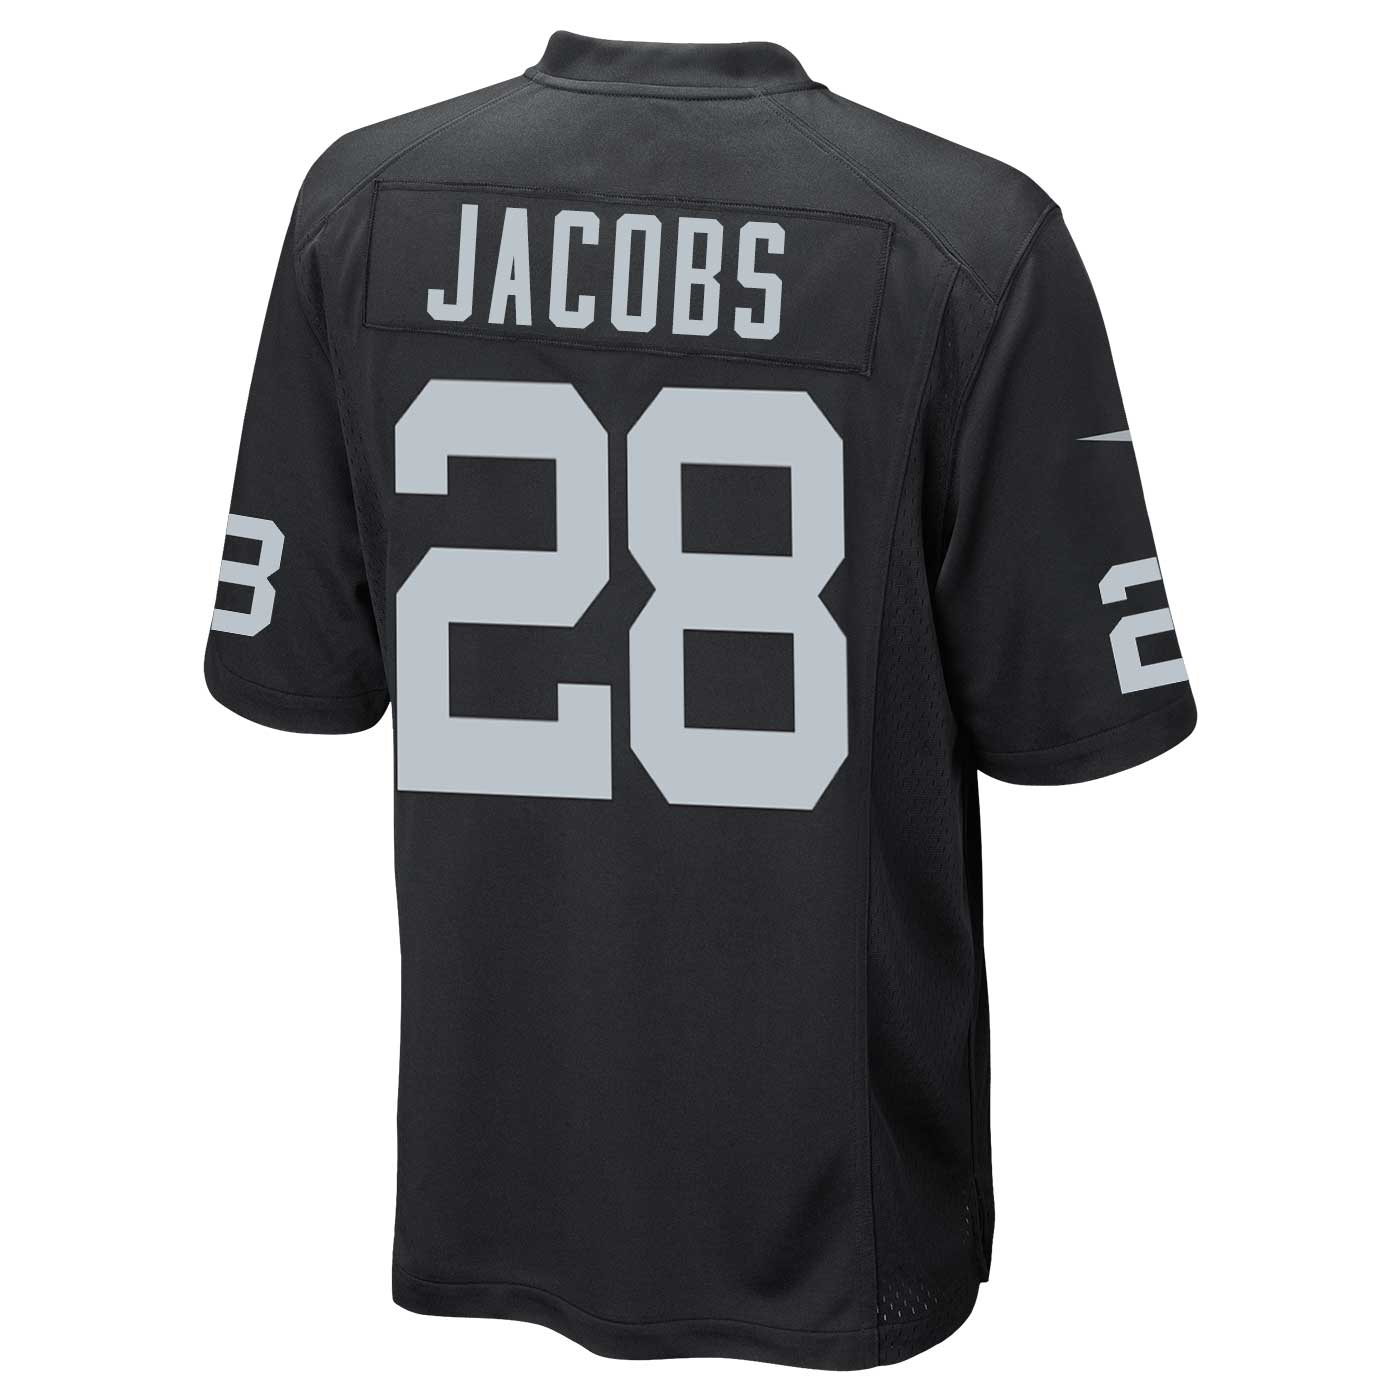 jacobs raiders jersey